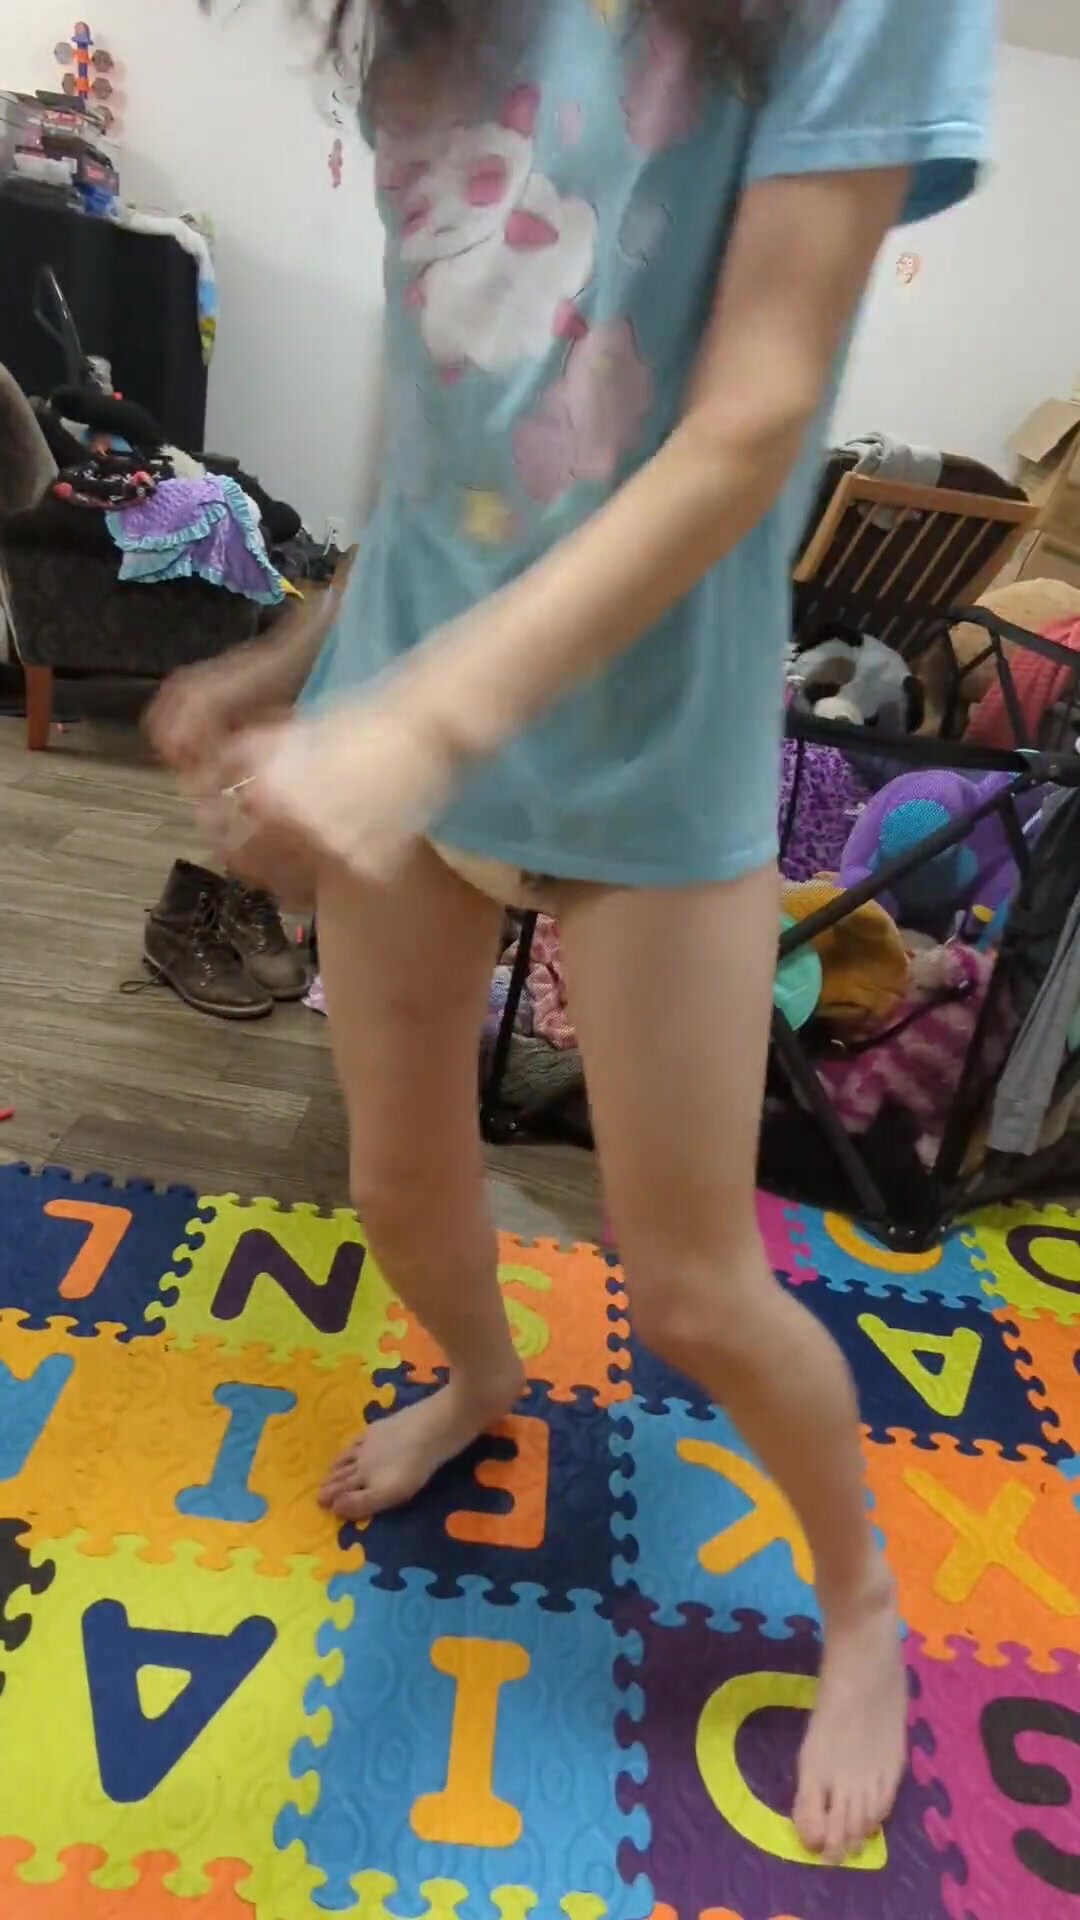 Cute trans girl dances